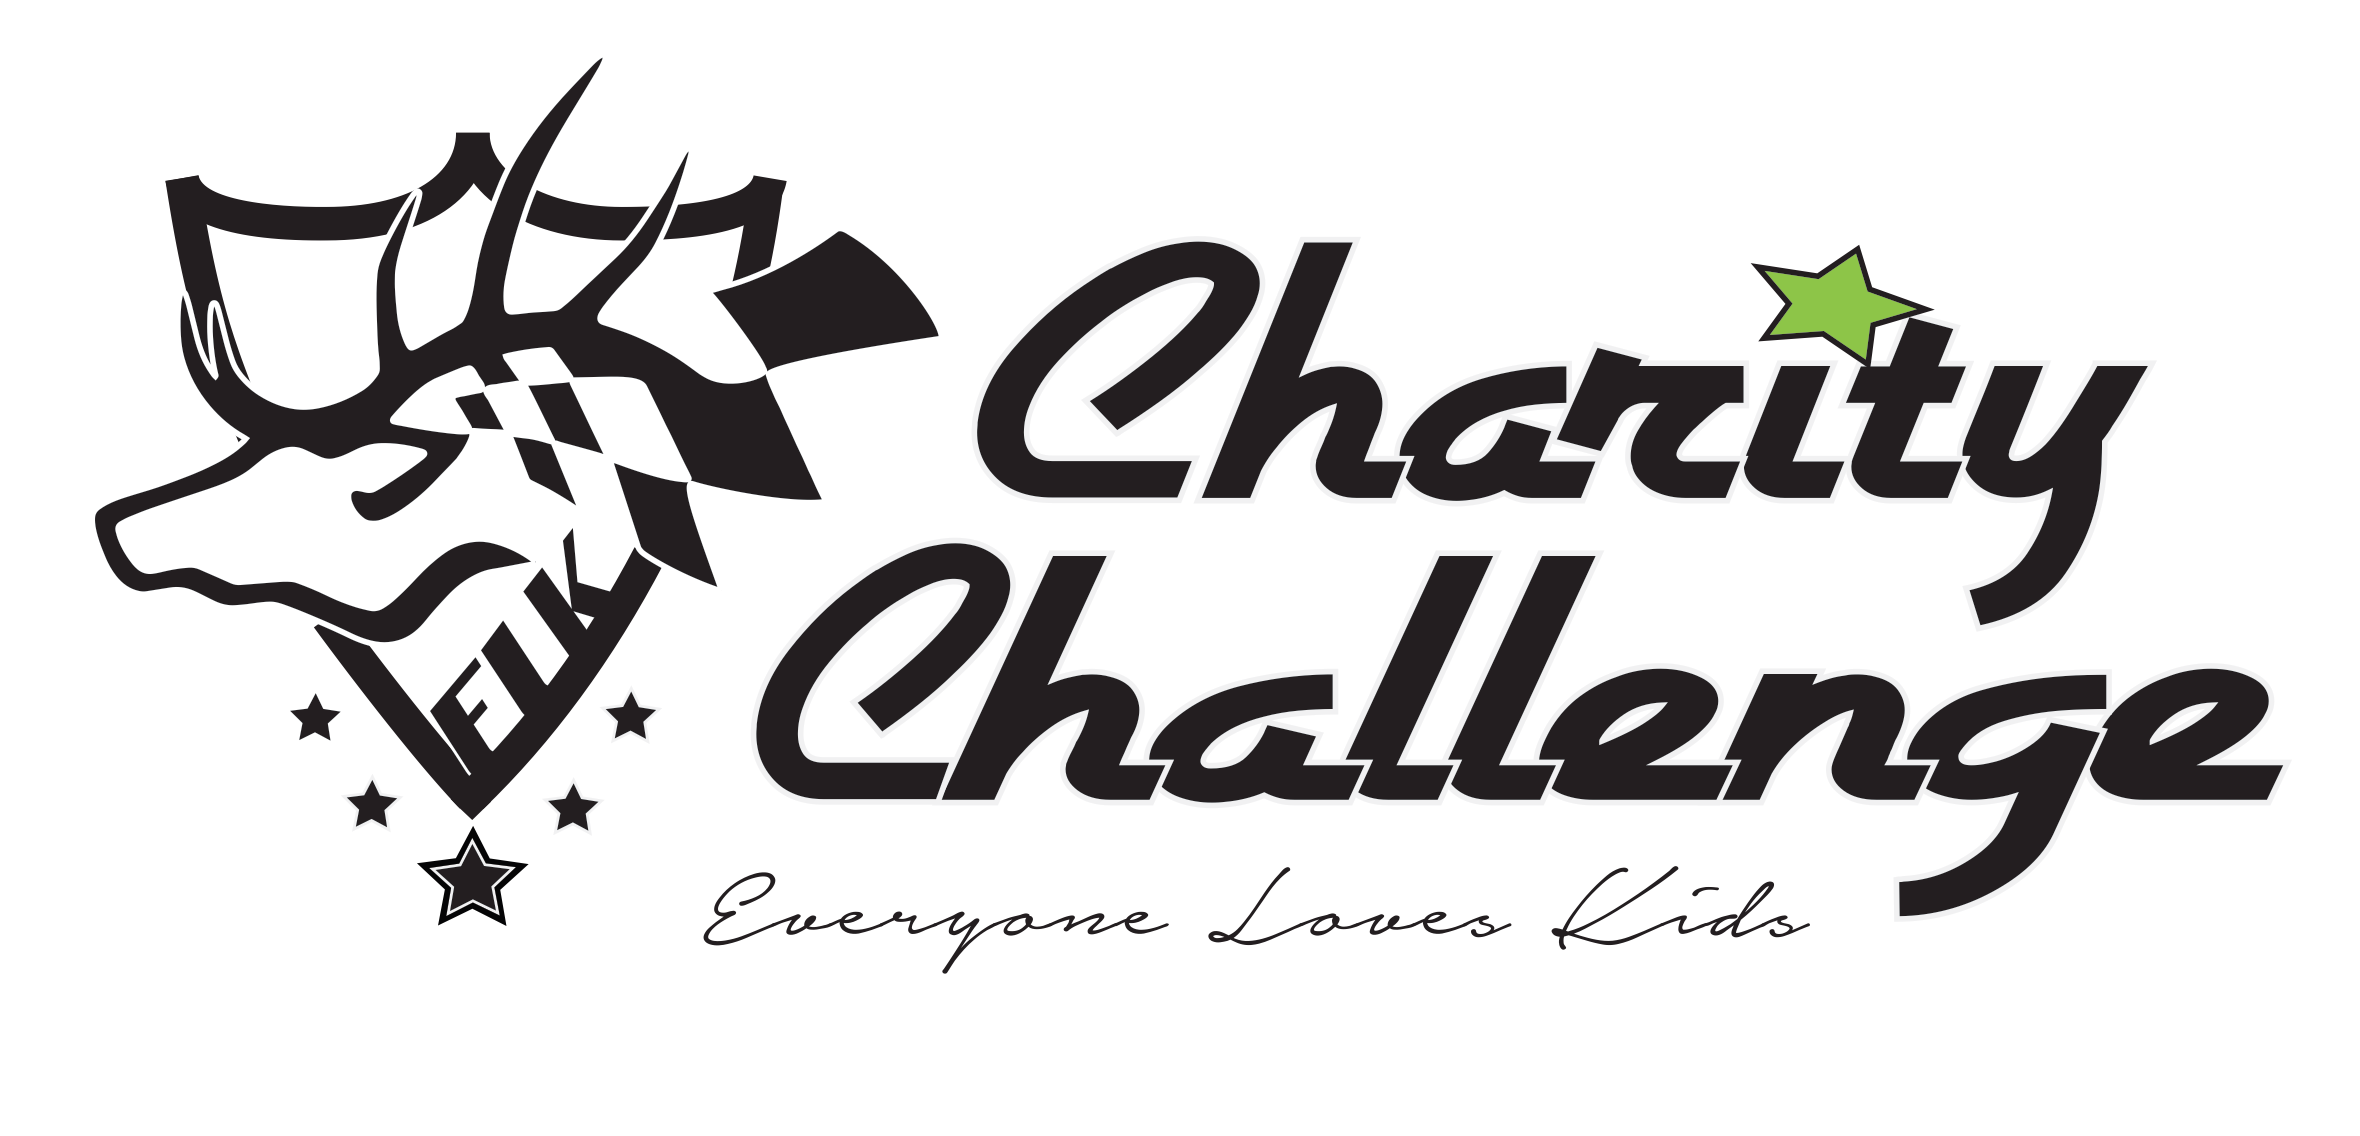 The 2016 E.L.K. Charity Challenge